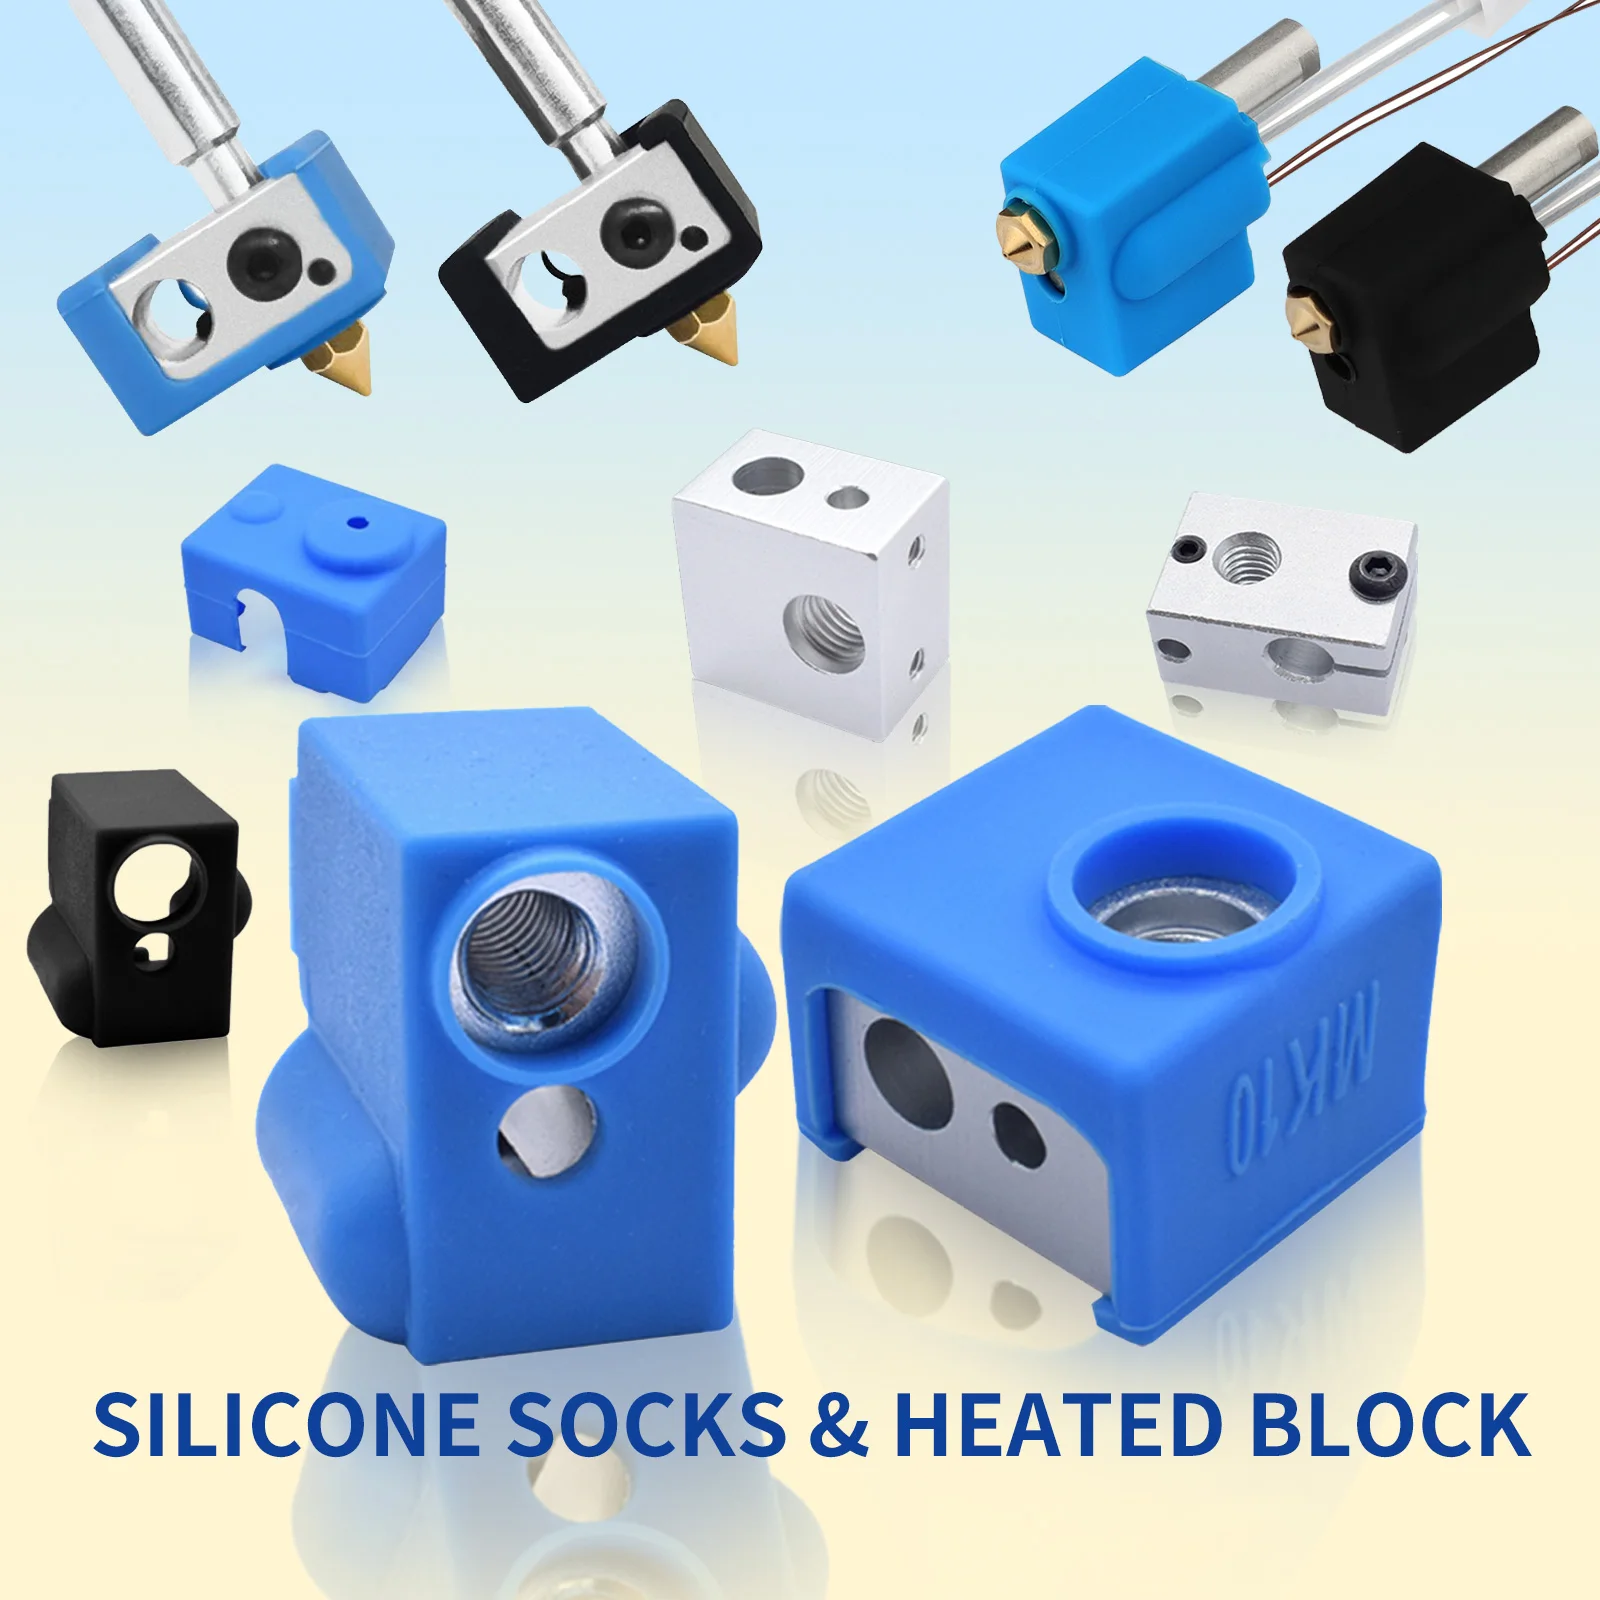 Silicone Socks For E3D V6/V5 MK8 MK9/MK10/Volnaco Heated Block Sleeve Hotend Protector Cover For 3D Printer Parts Heater Blocks 3d printer mk8 protective silicone sock cover case for ender 3 heater block of cr10 10s s4 s5 anet a8 mk7 mk8 mk9 hotend